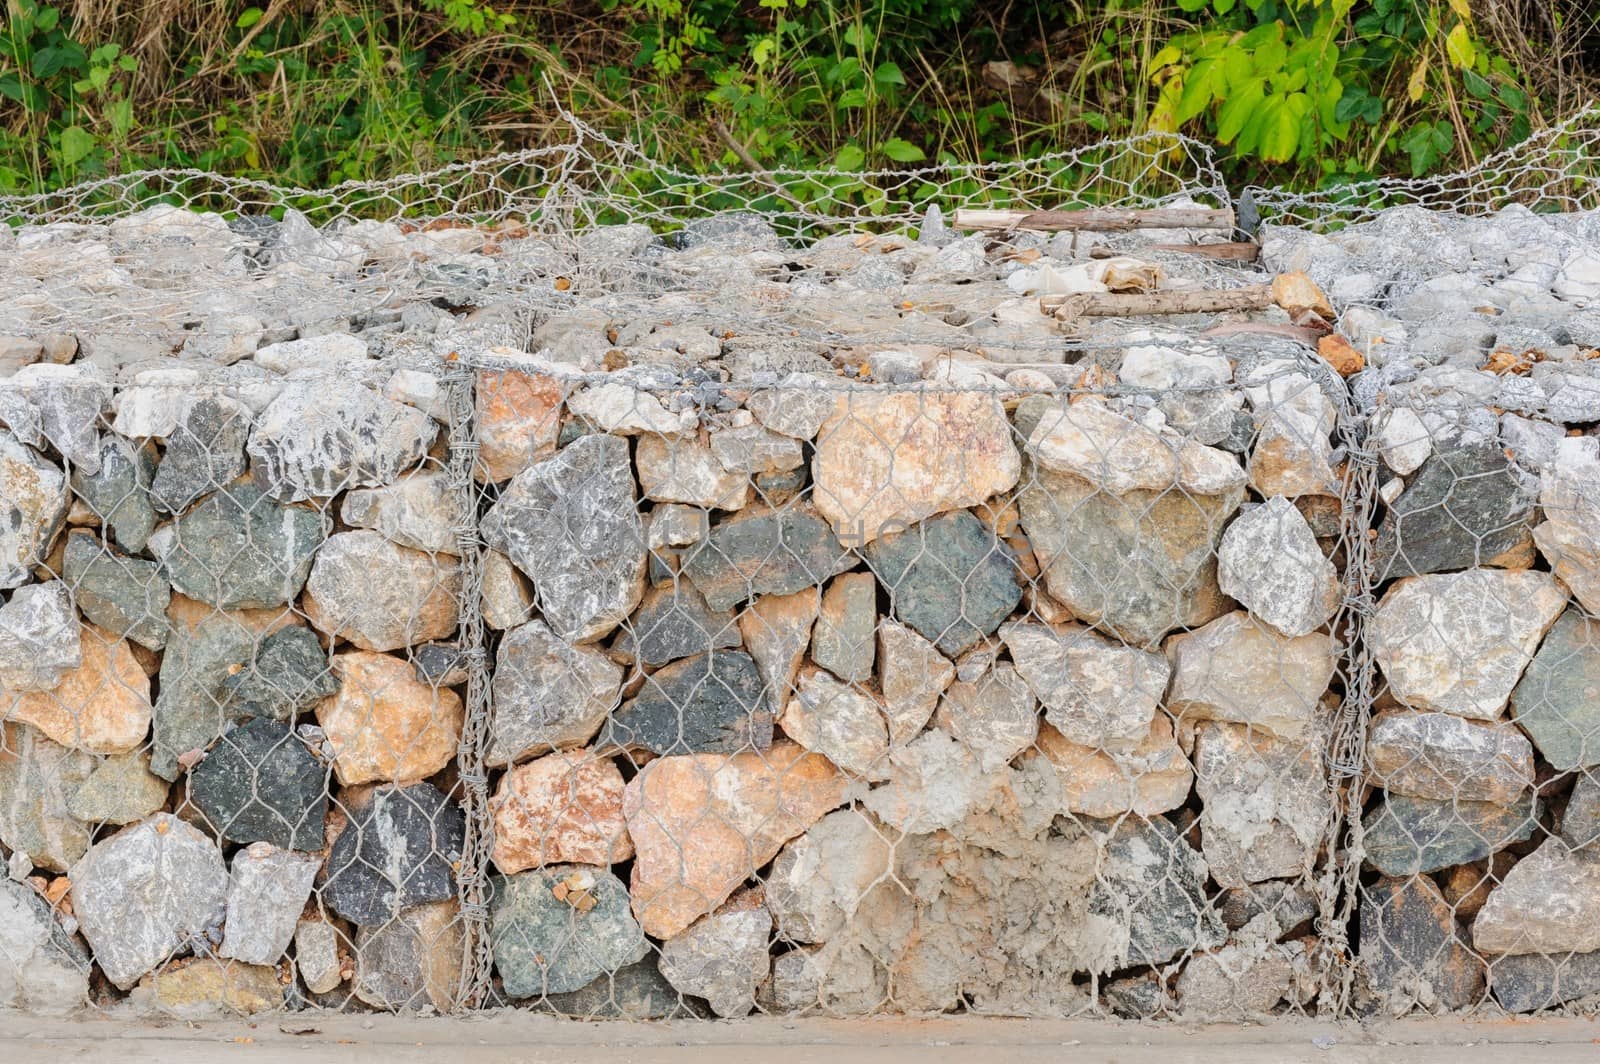 Rock blocks prevent landslides by ngungfoto